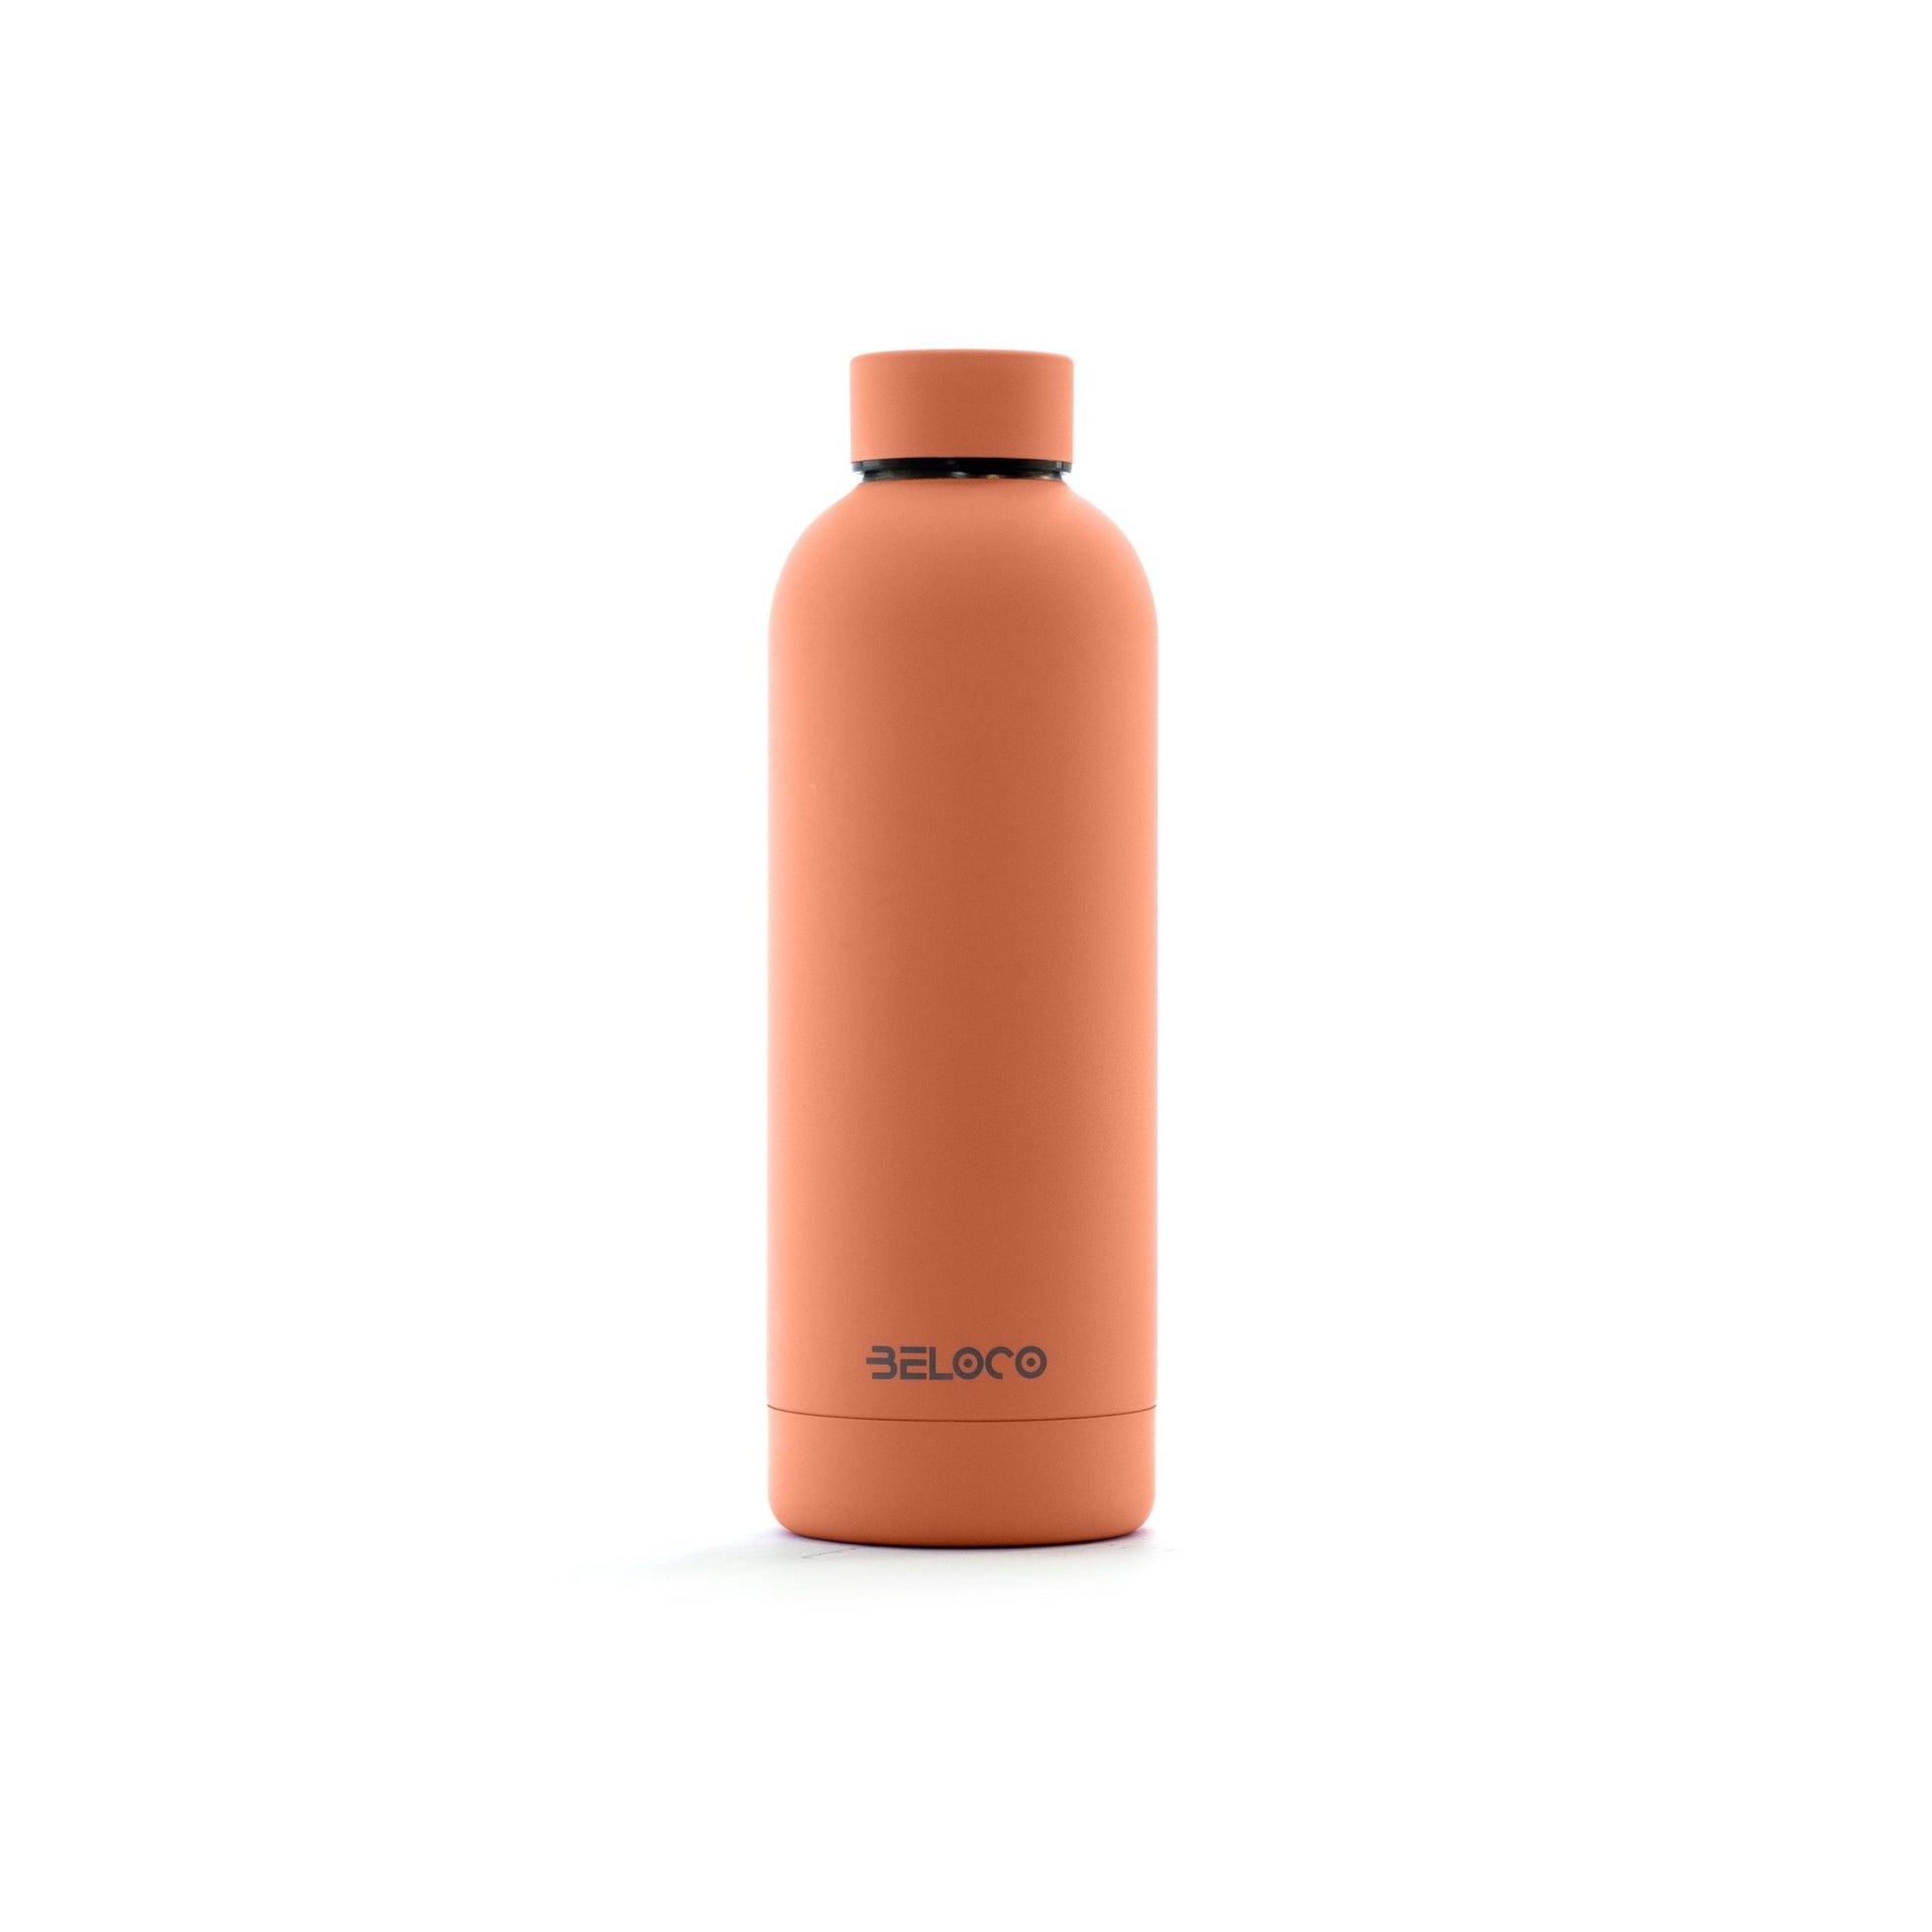 Ginger bottle - 500 ml - BeLoco